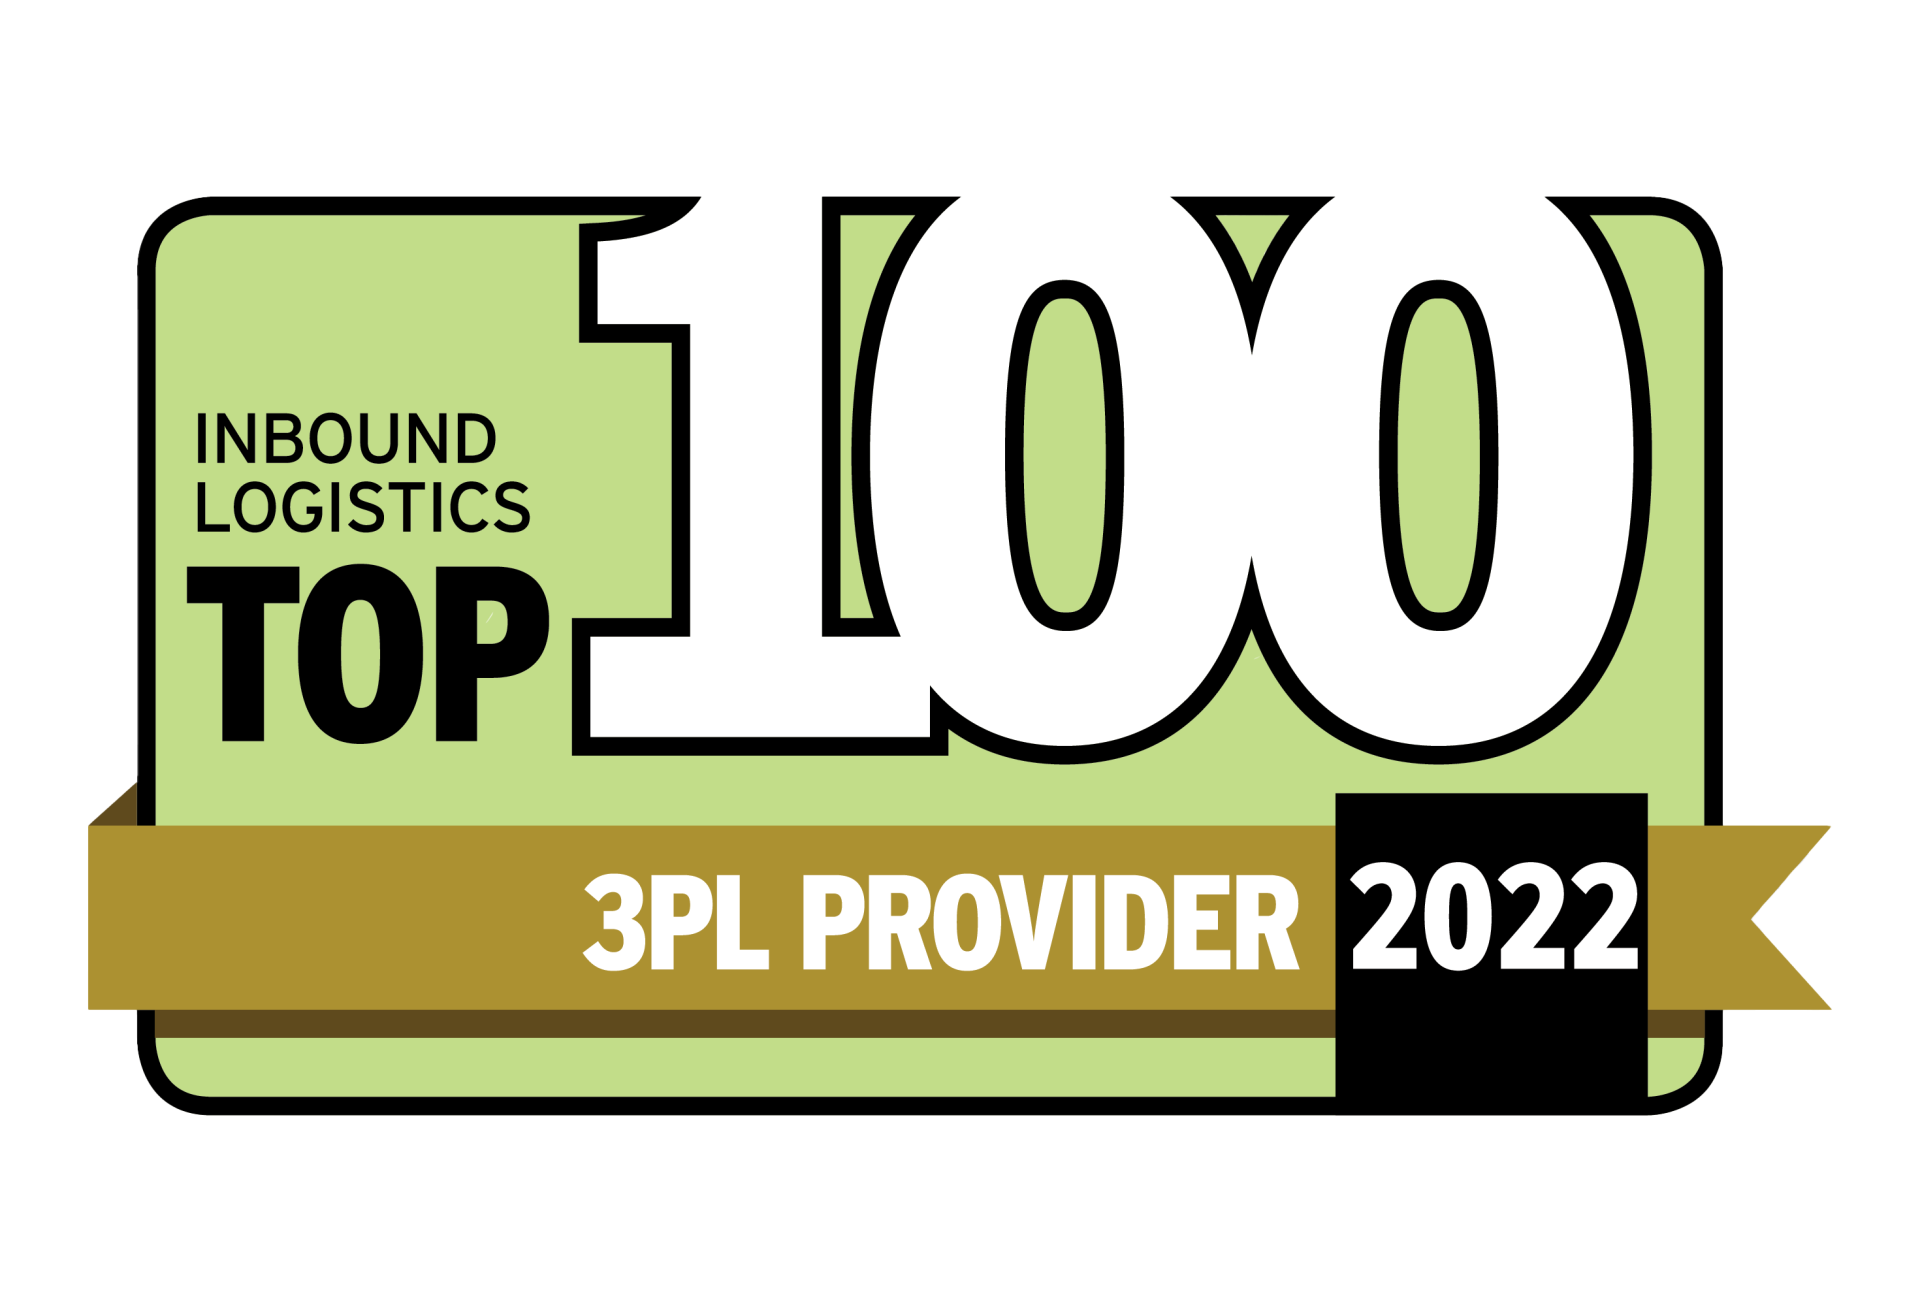 inbound logistics top 100 3PL provider 2022 logo